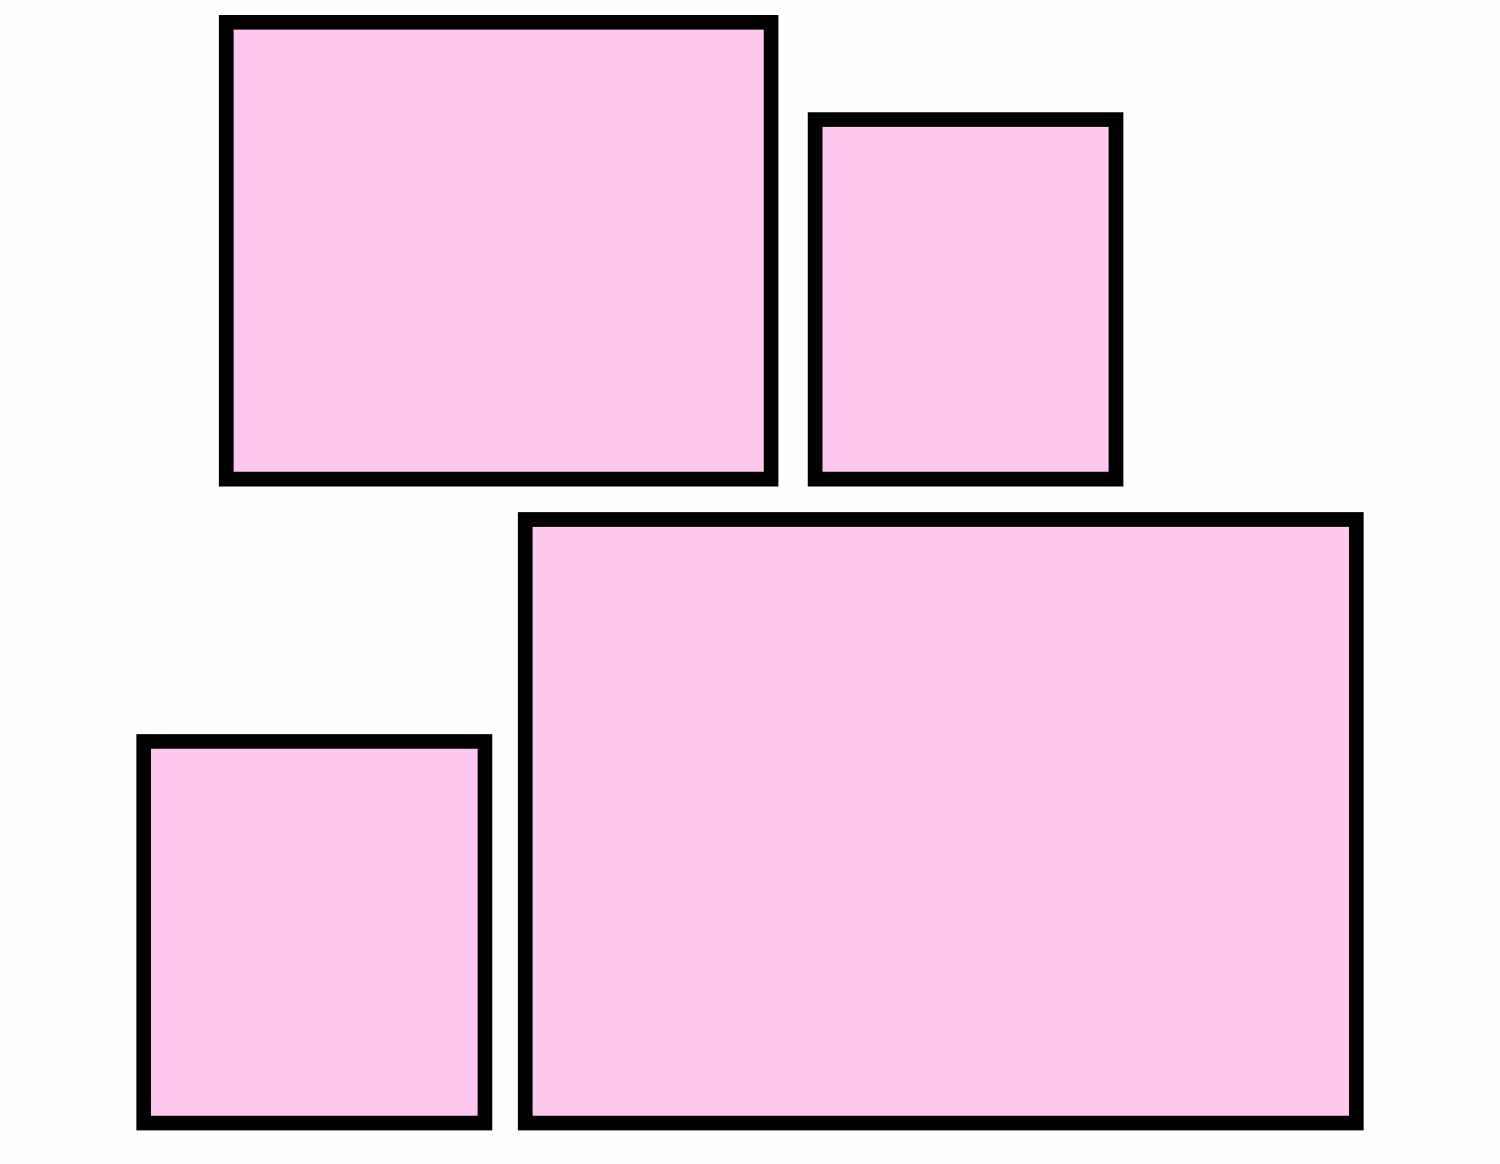 Irregular grid layout